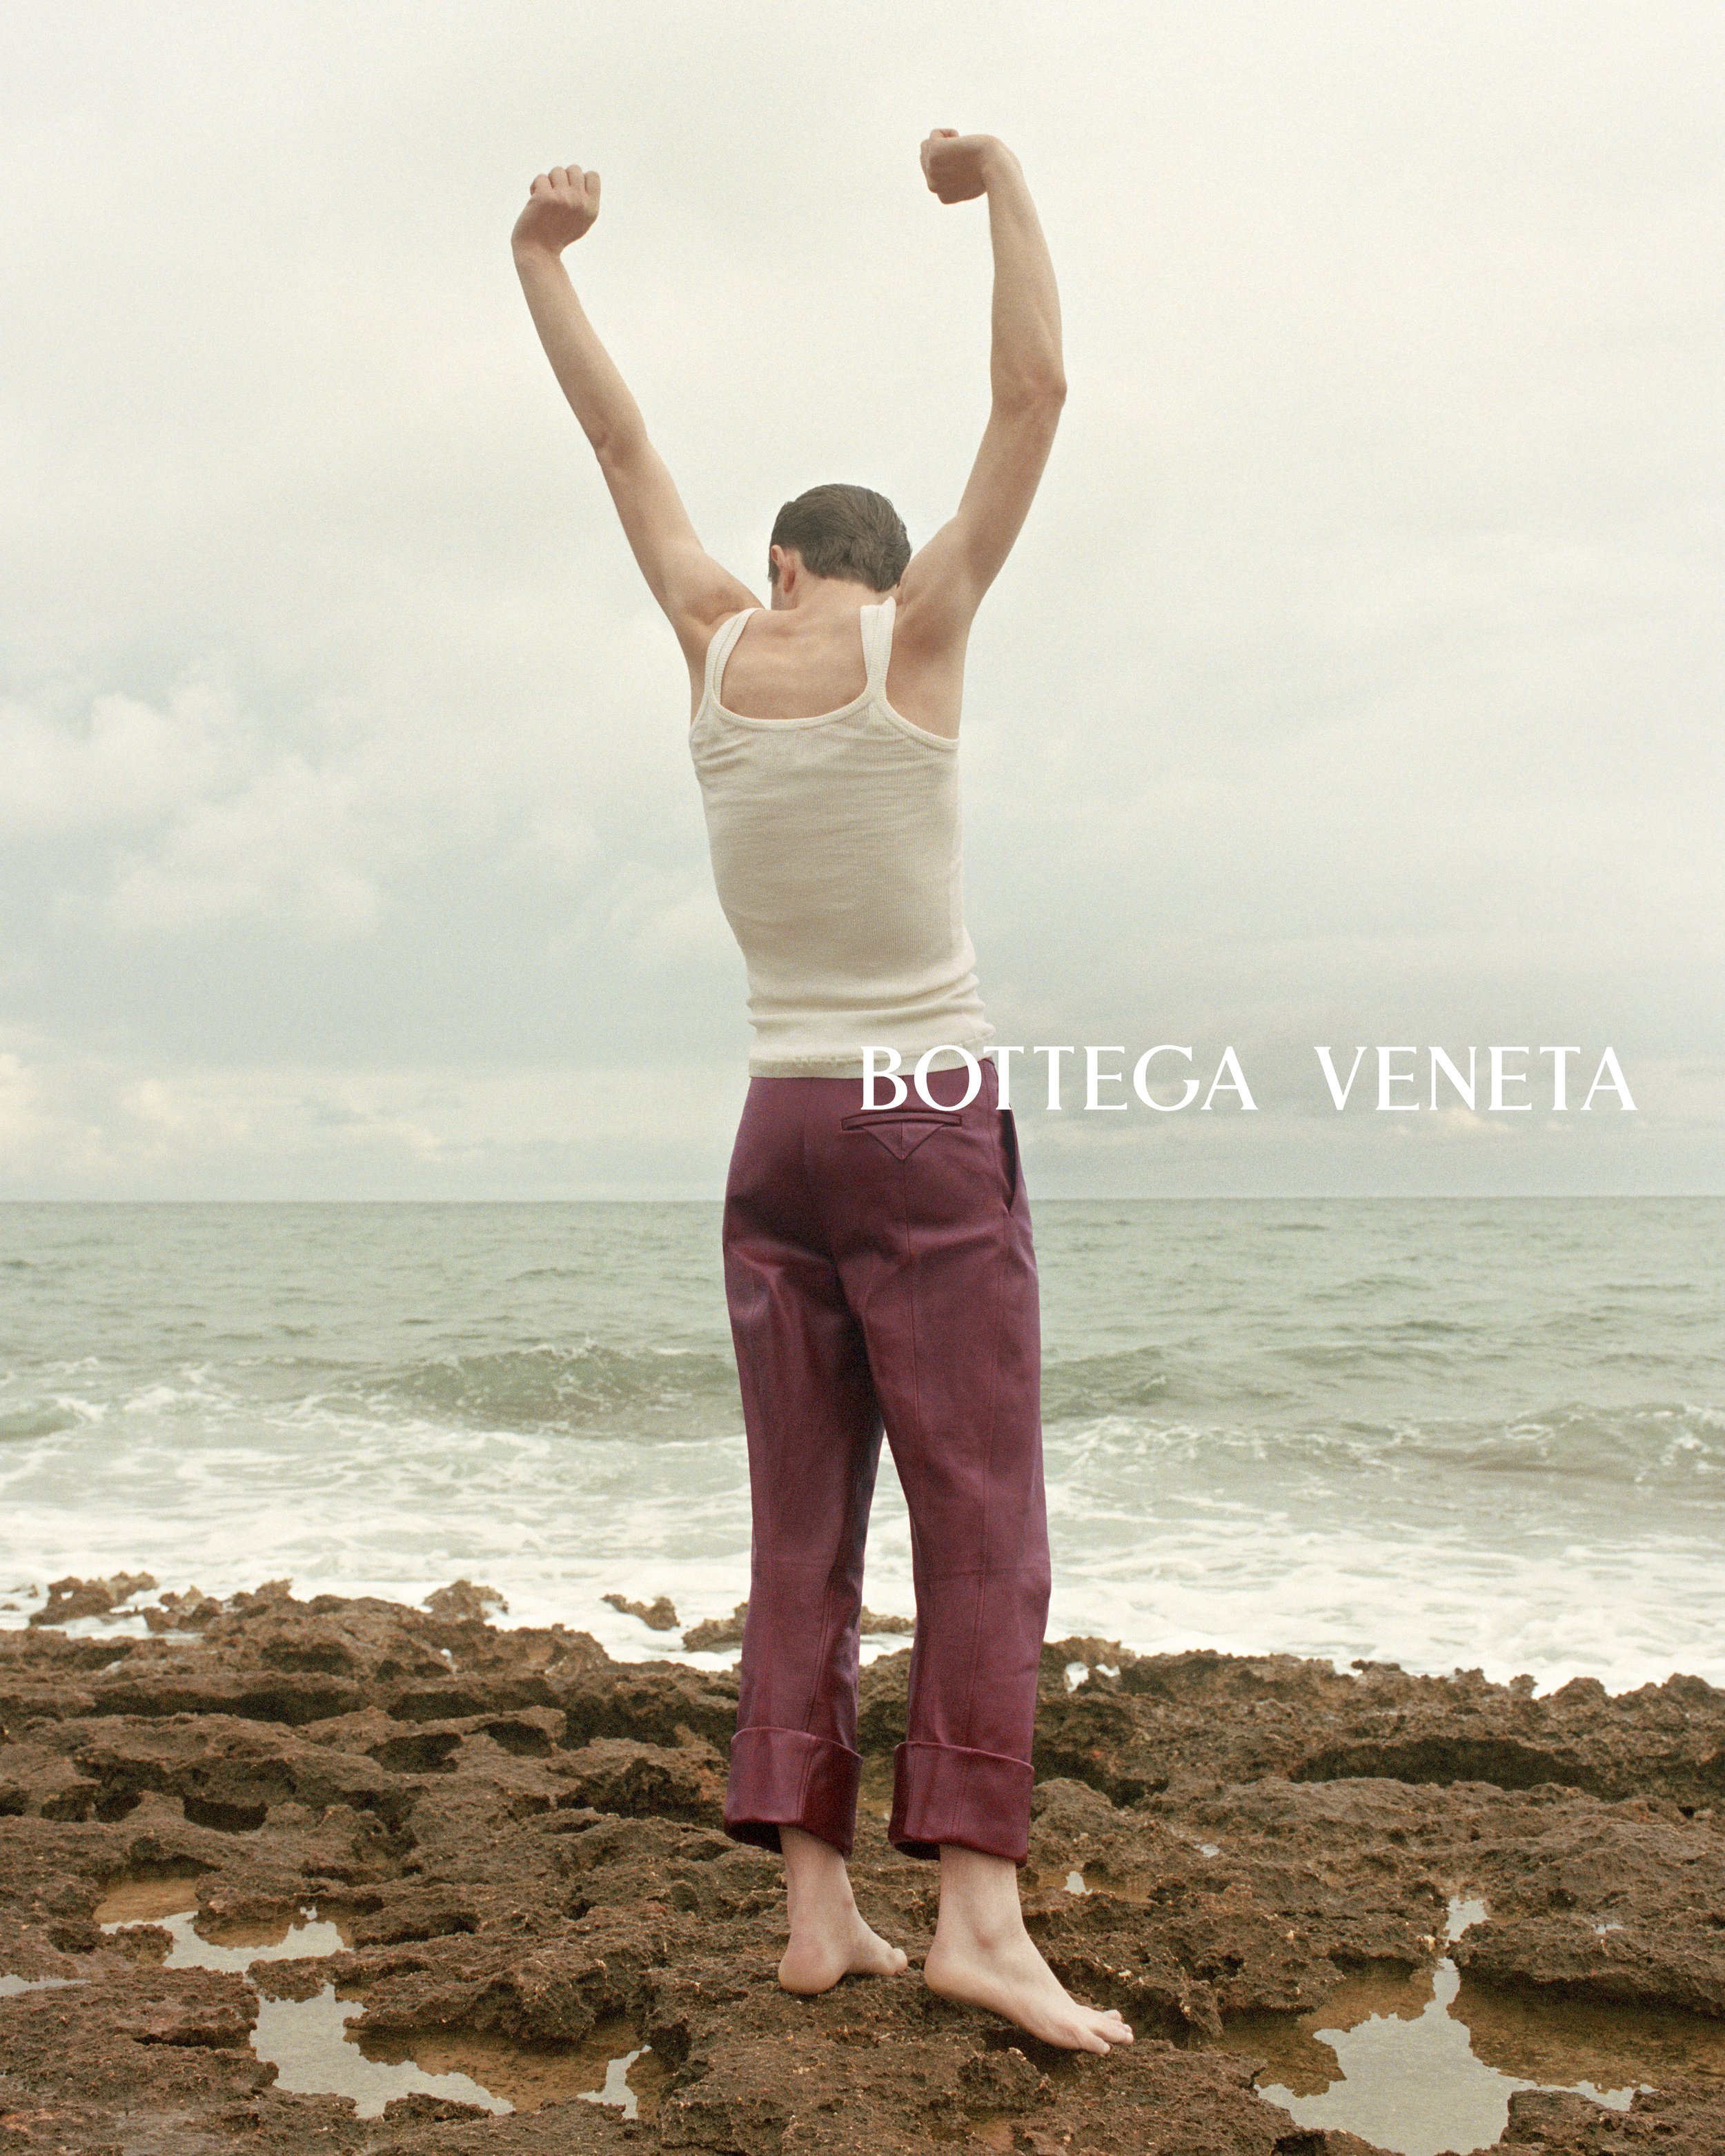 Bottega Veneta introduces the new Andiamo bag